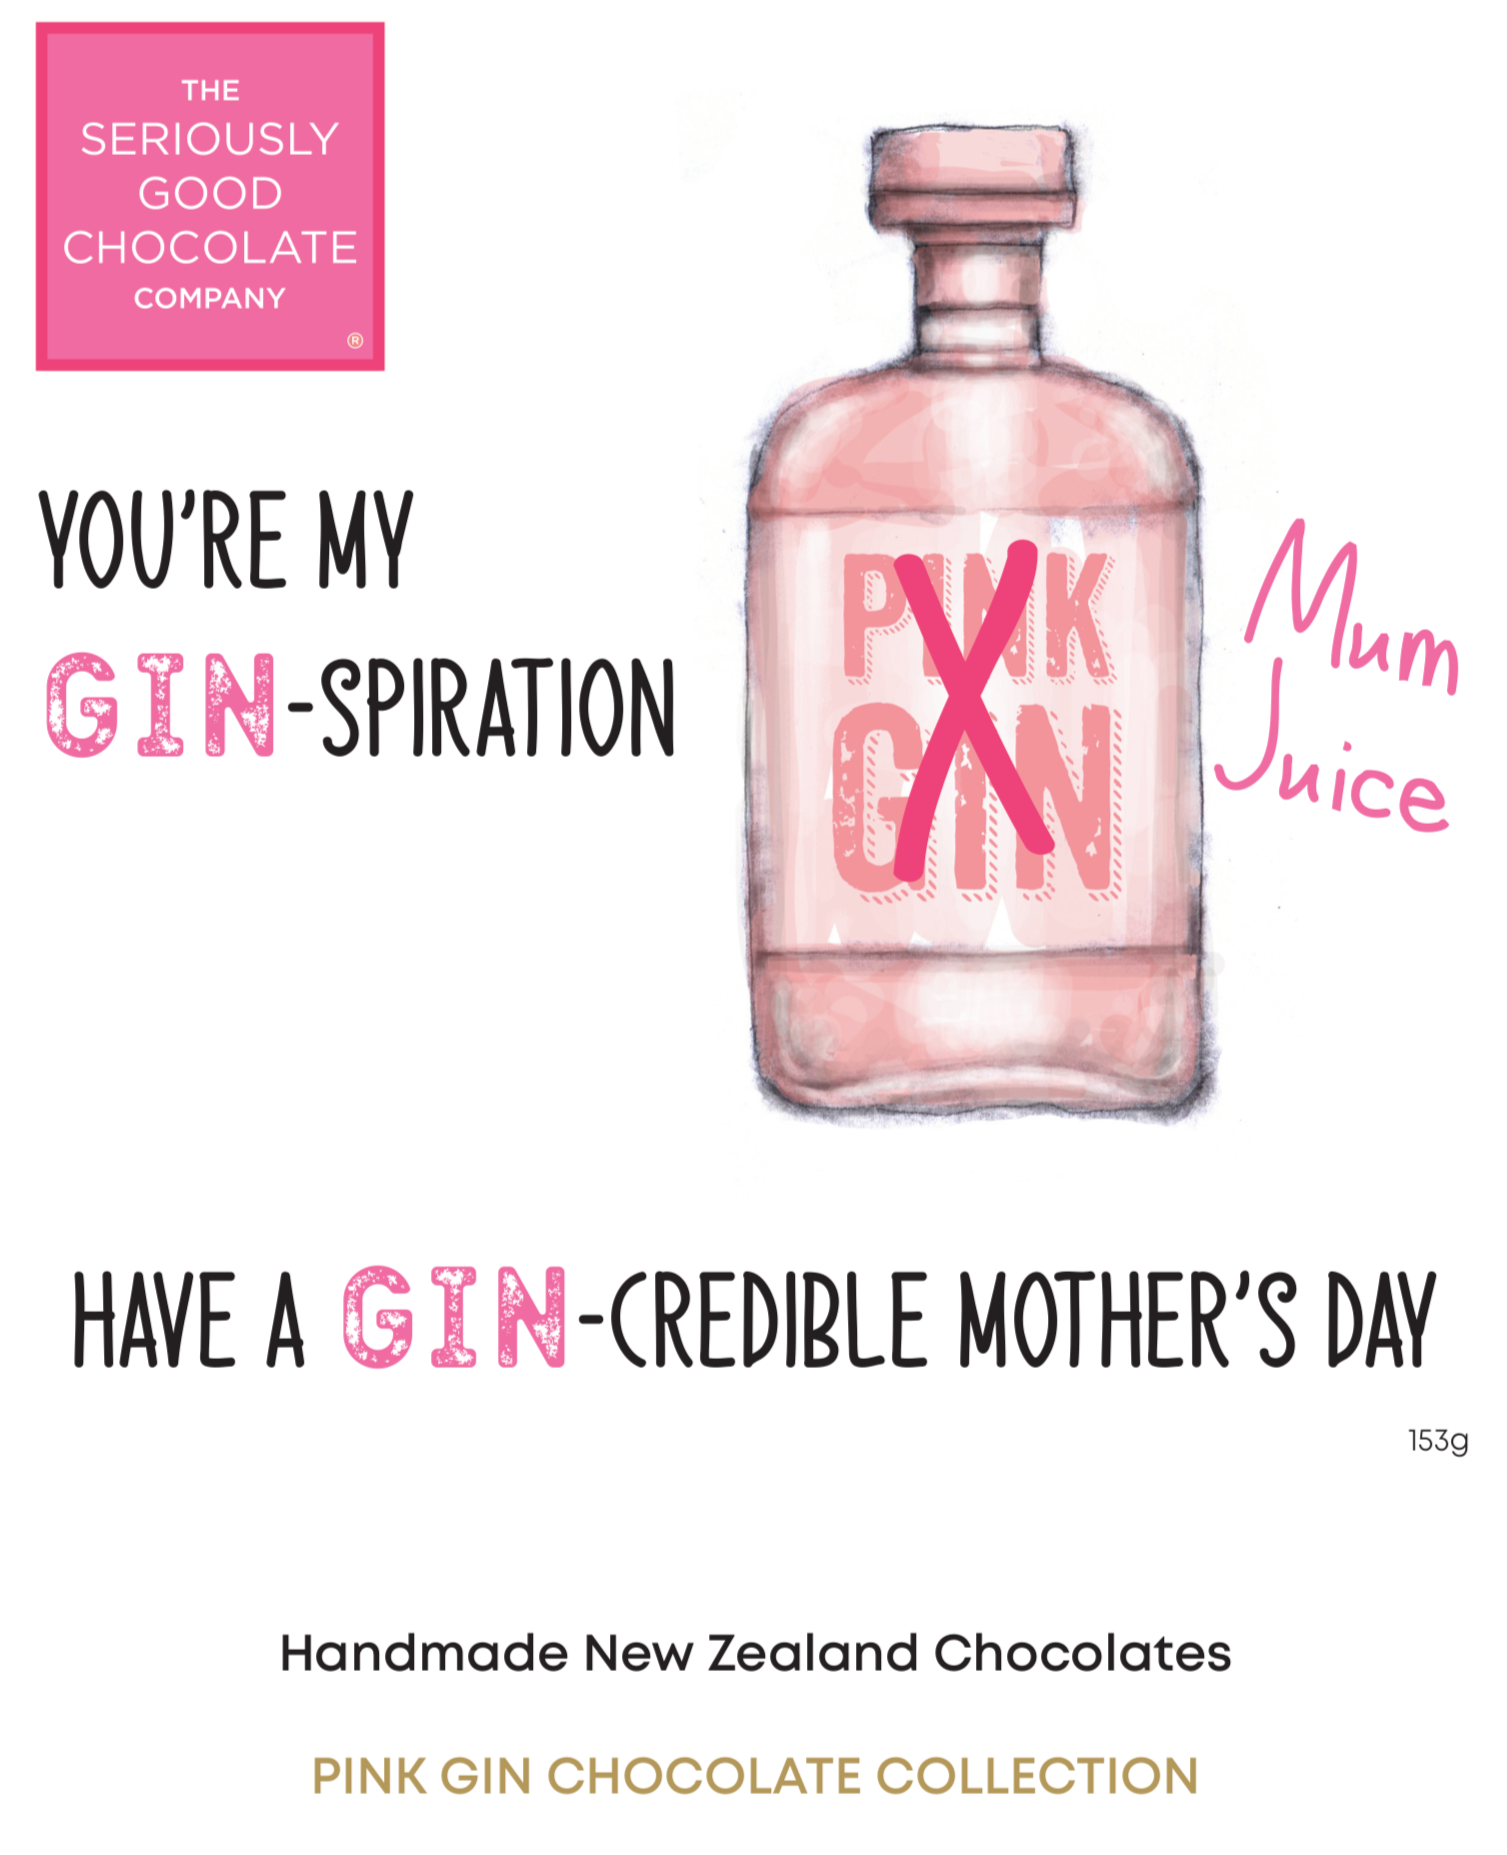 Mothers Words - Mum Juice 9 Box